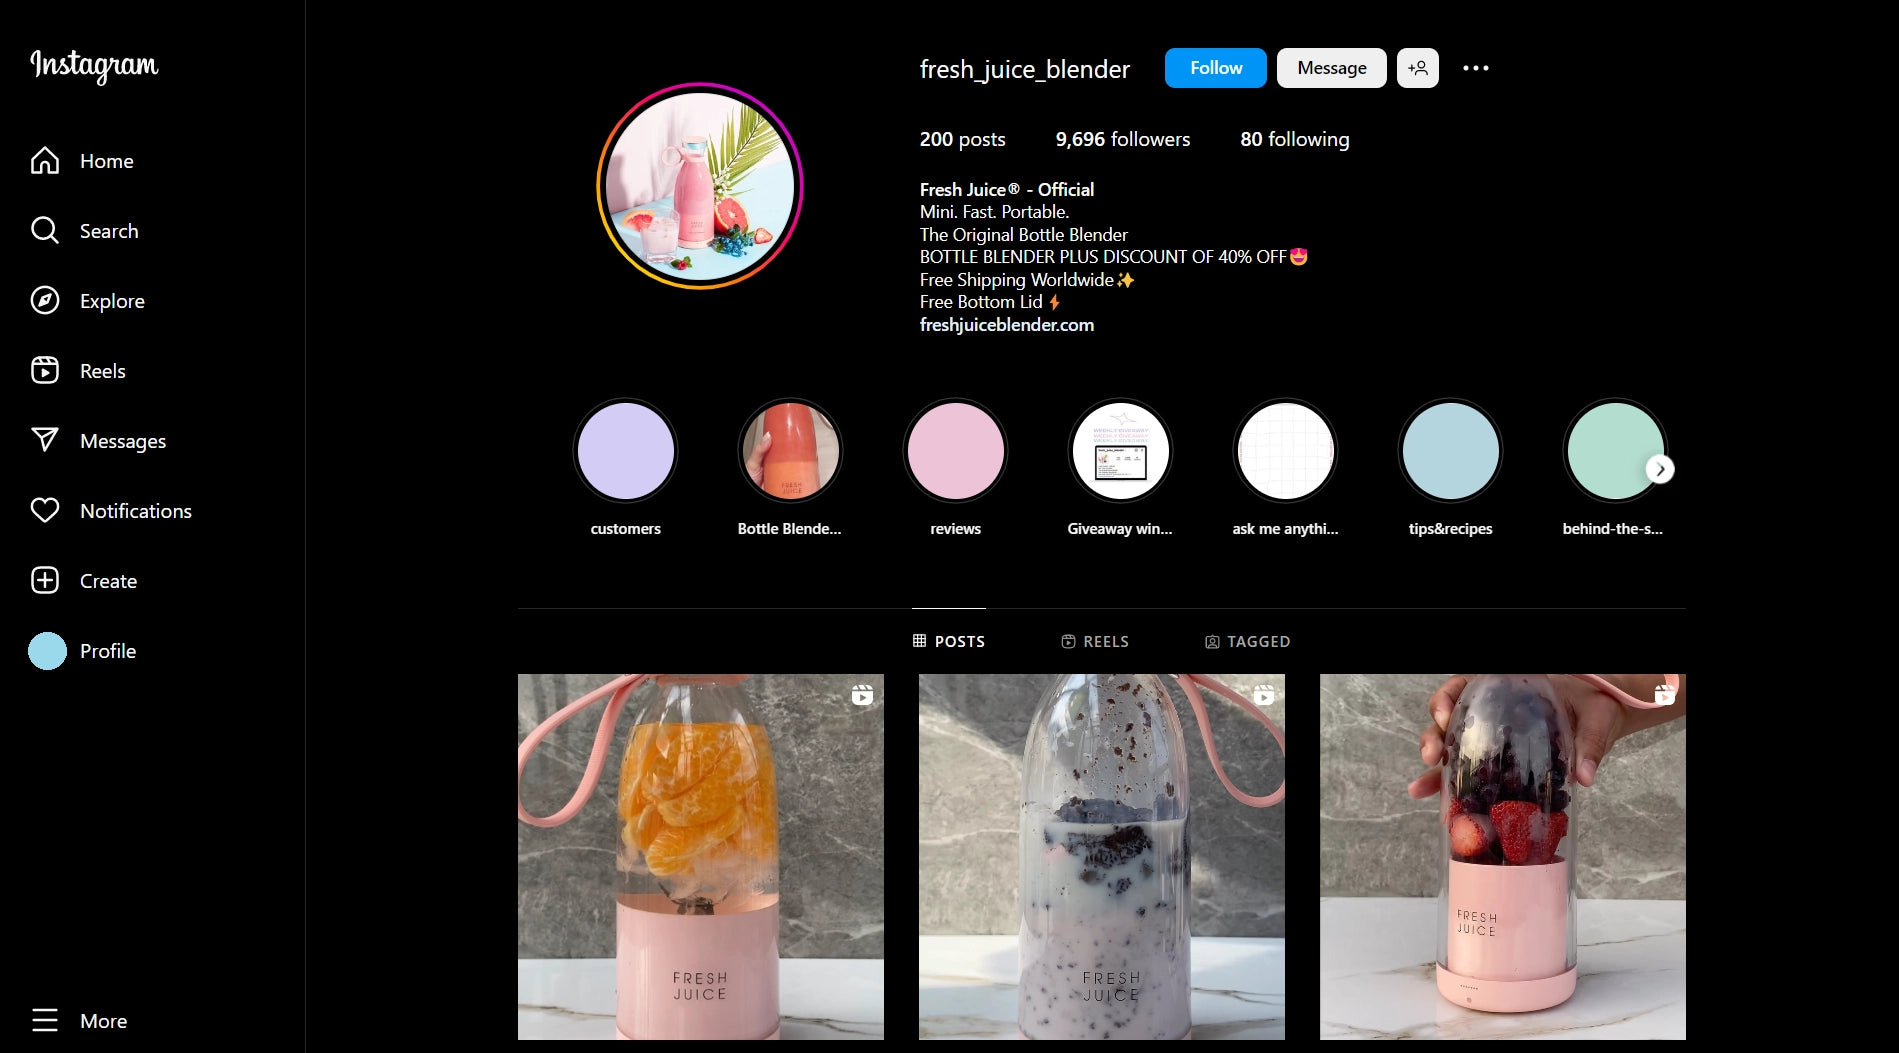 Fresh Juice Blender’s Instagram account